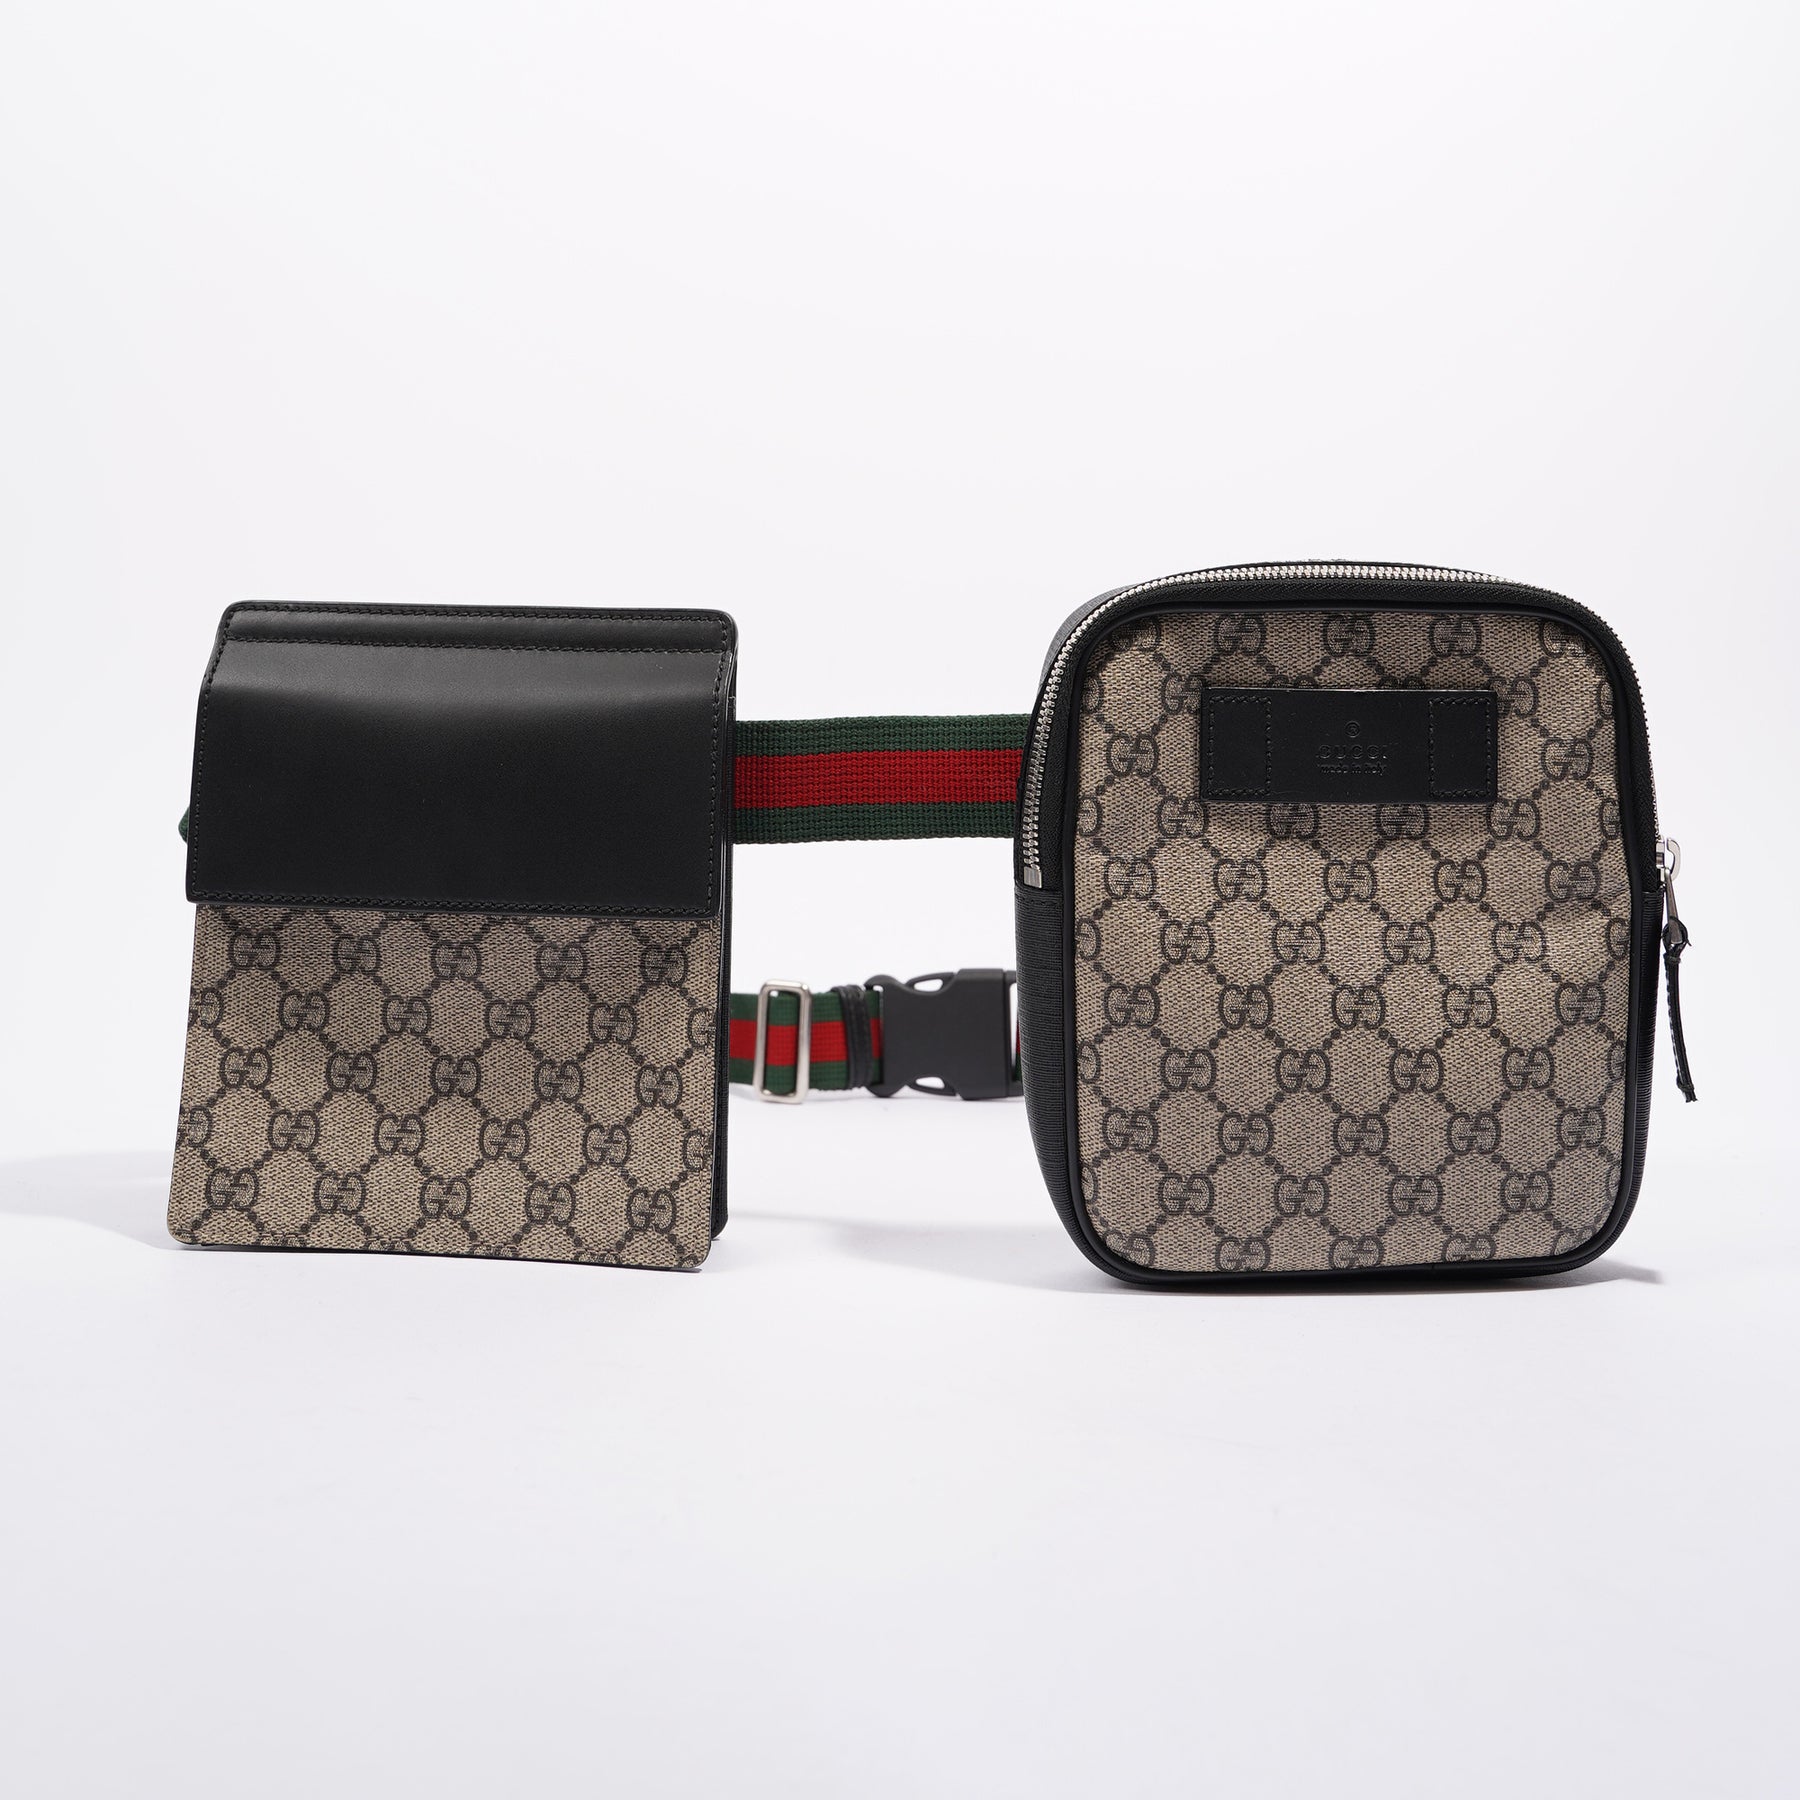 Imported GUCCI Sling Bag Set - Stylish and Designer